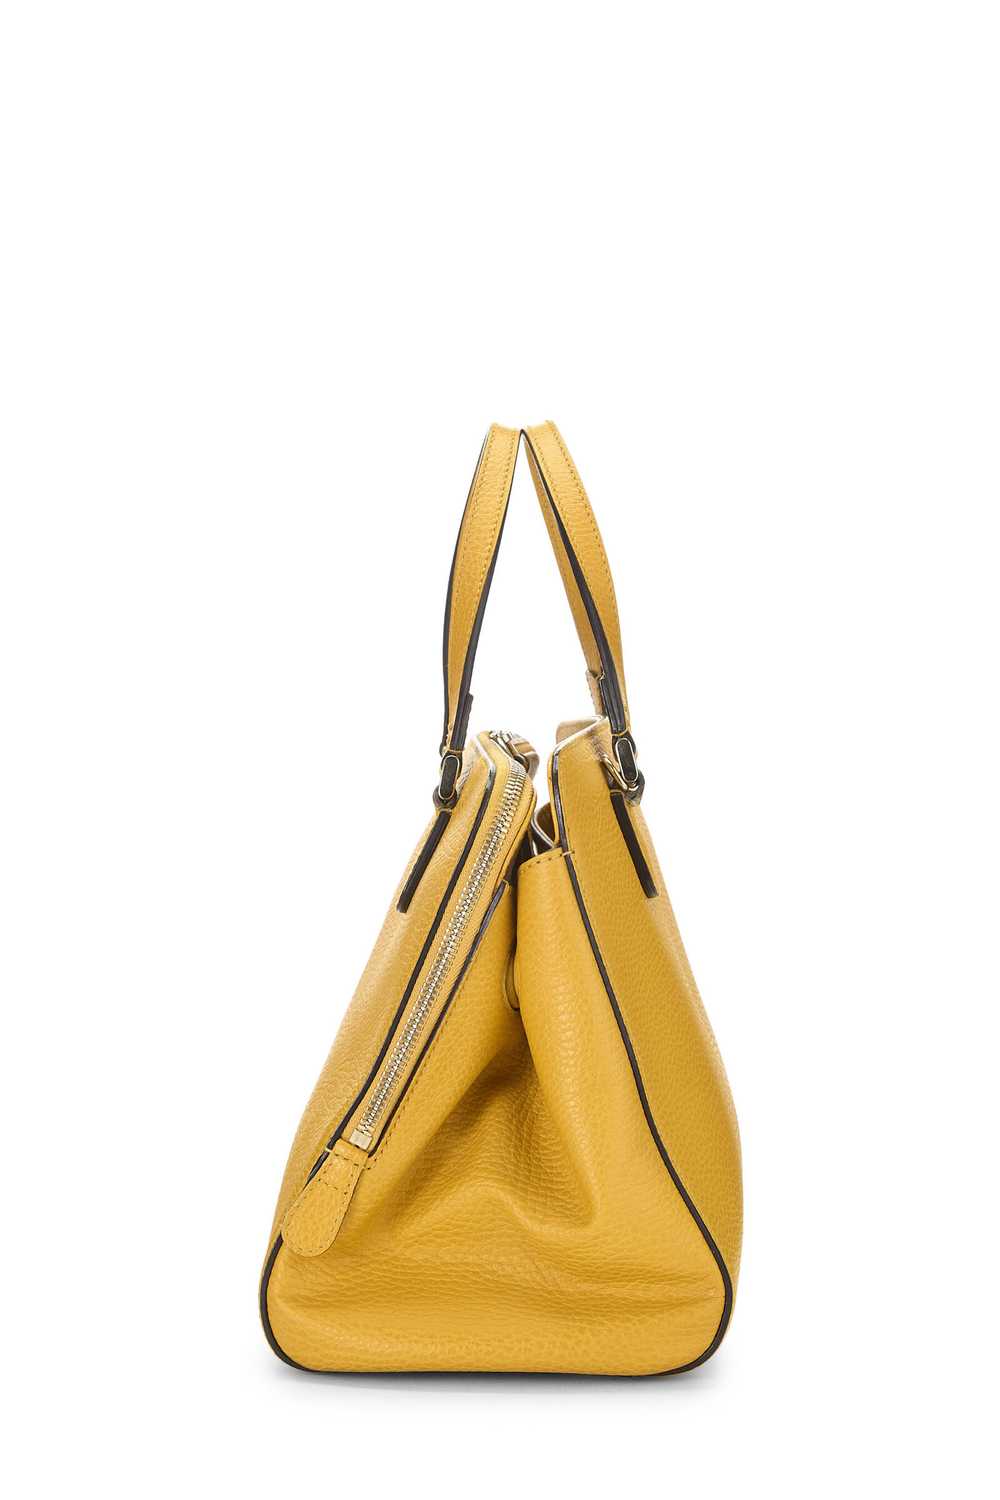 Yellow Leather Convertible Swing Top Handle Bag - image 3